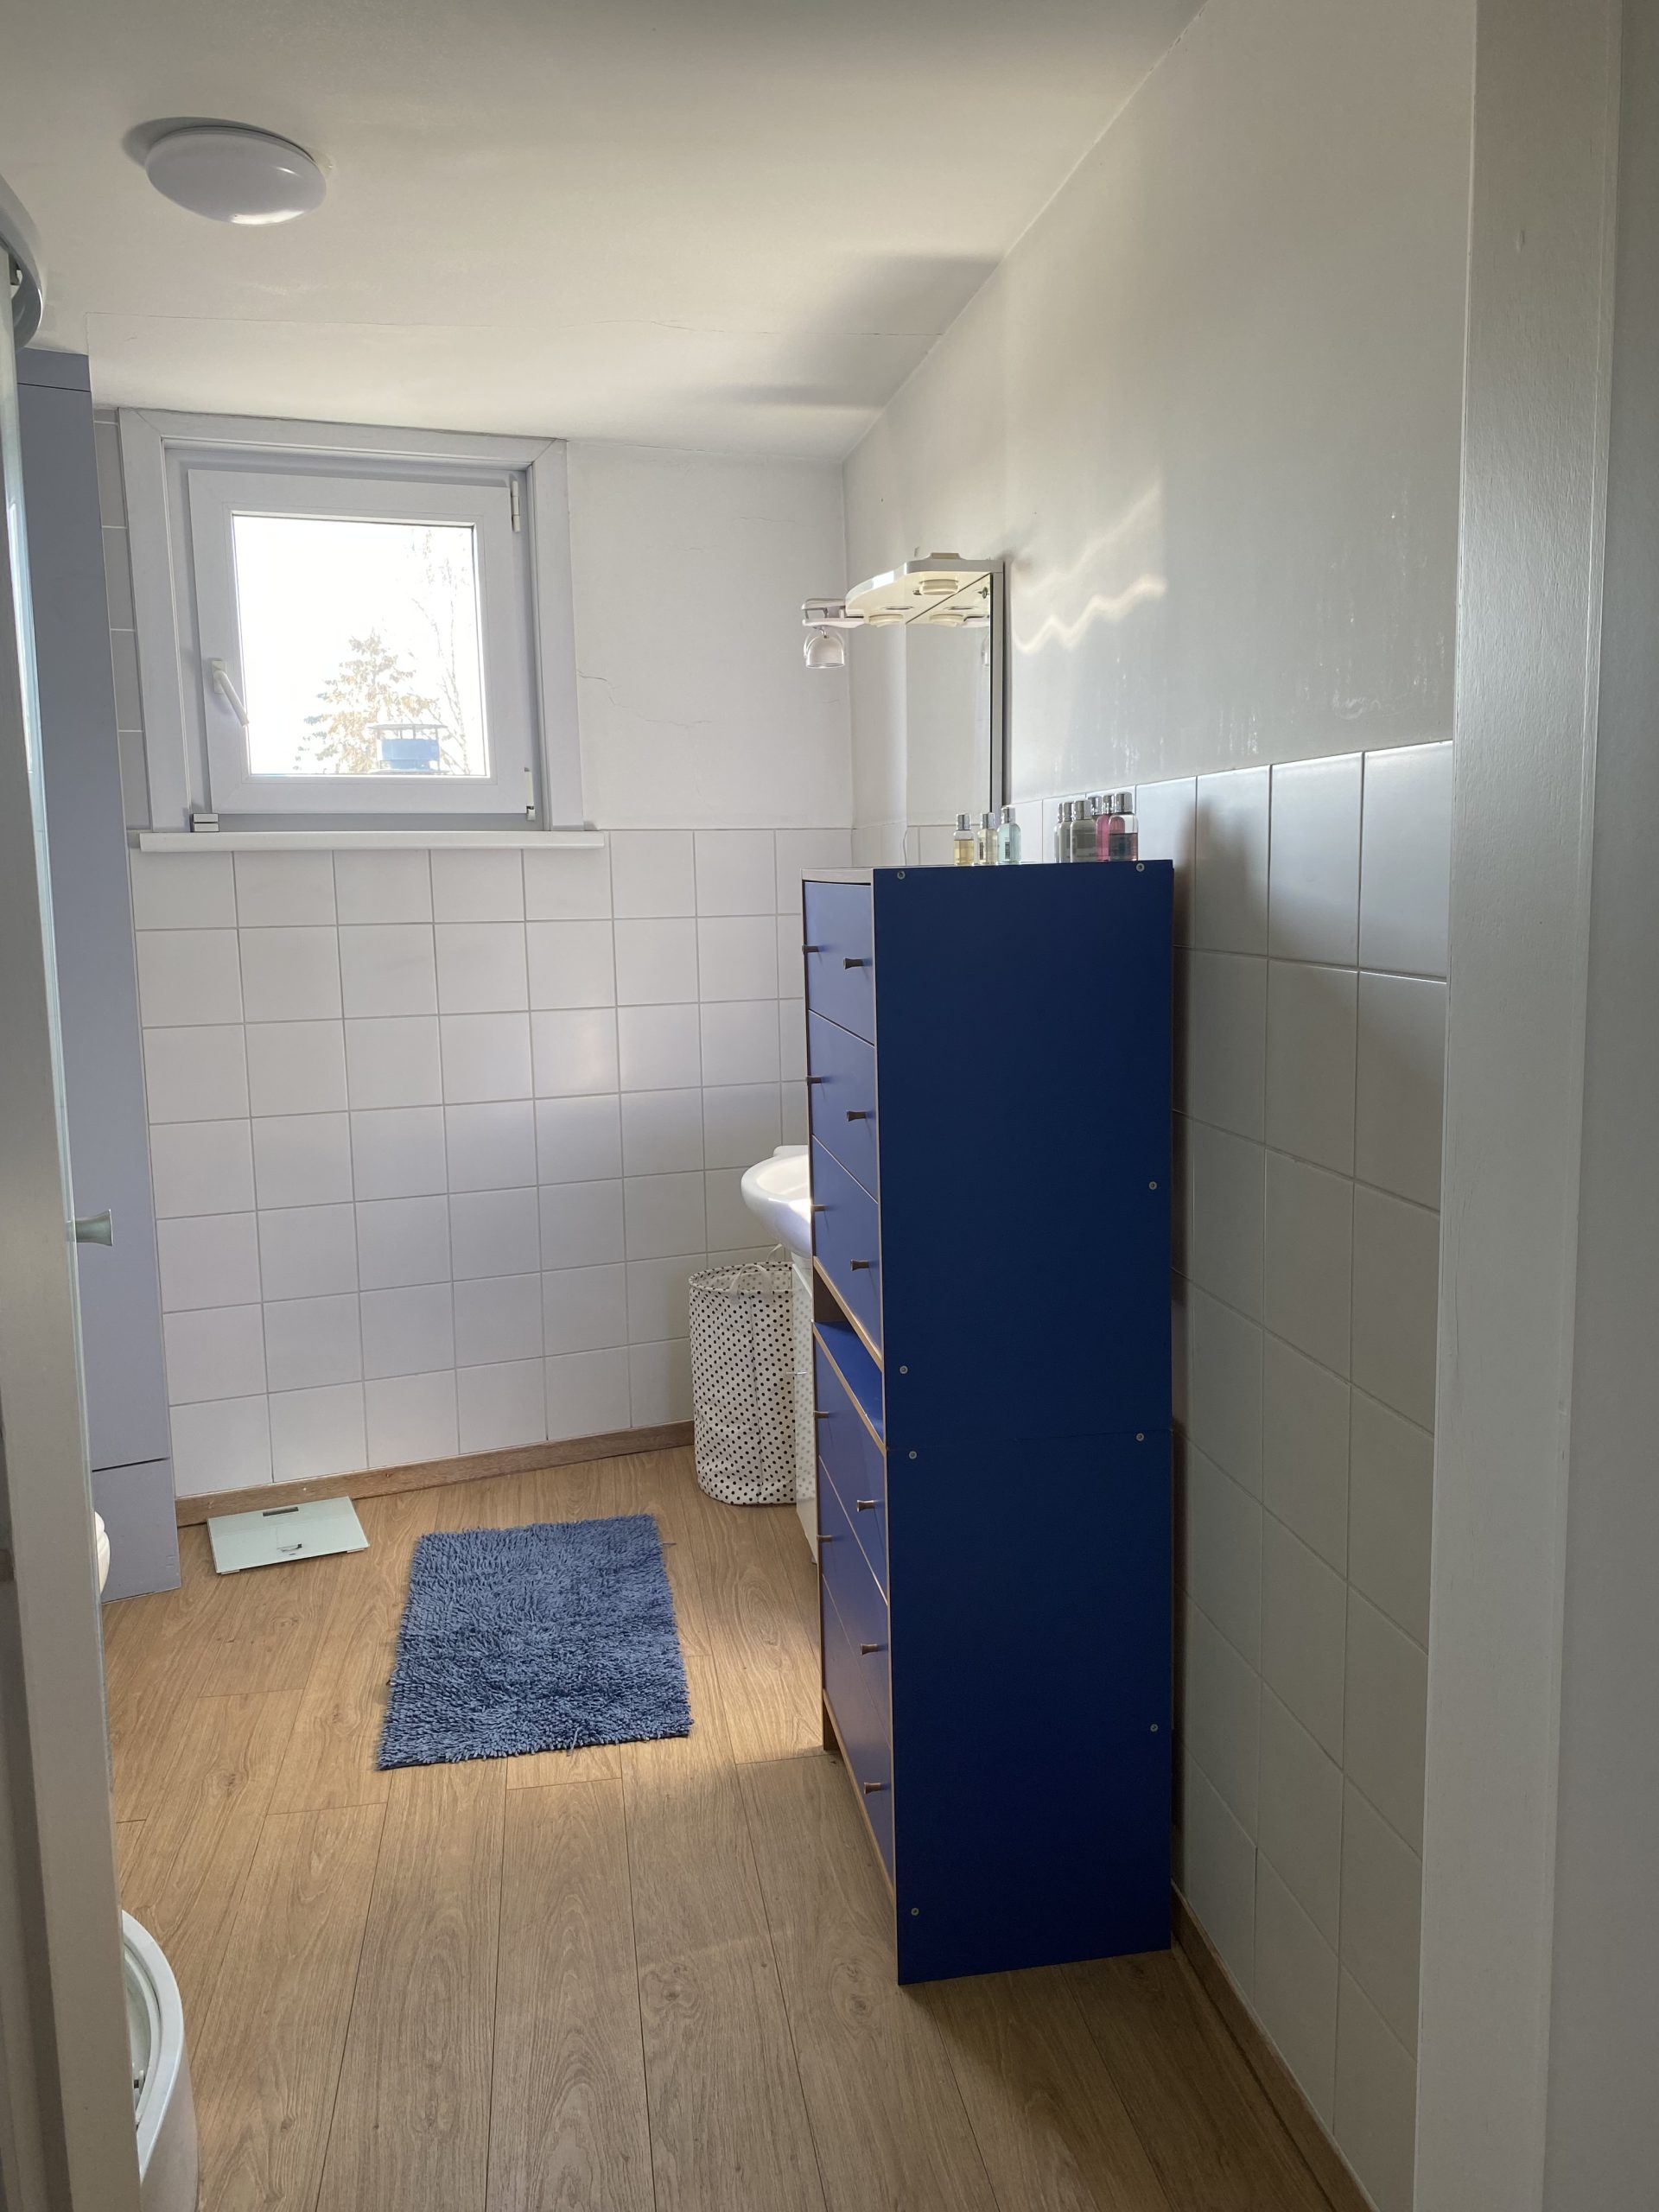 one-bedroom for rent in Ghent - Bathroom